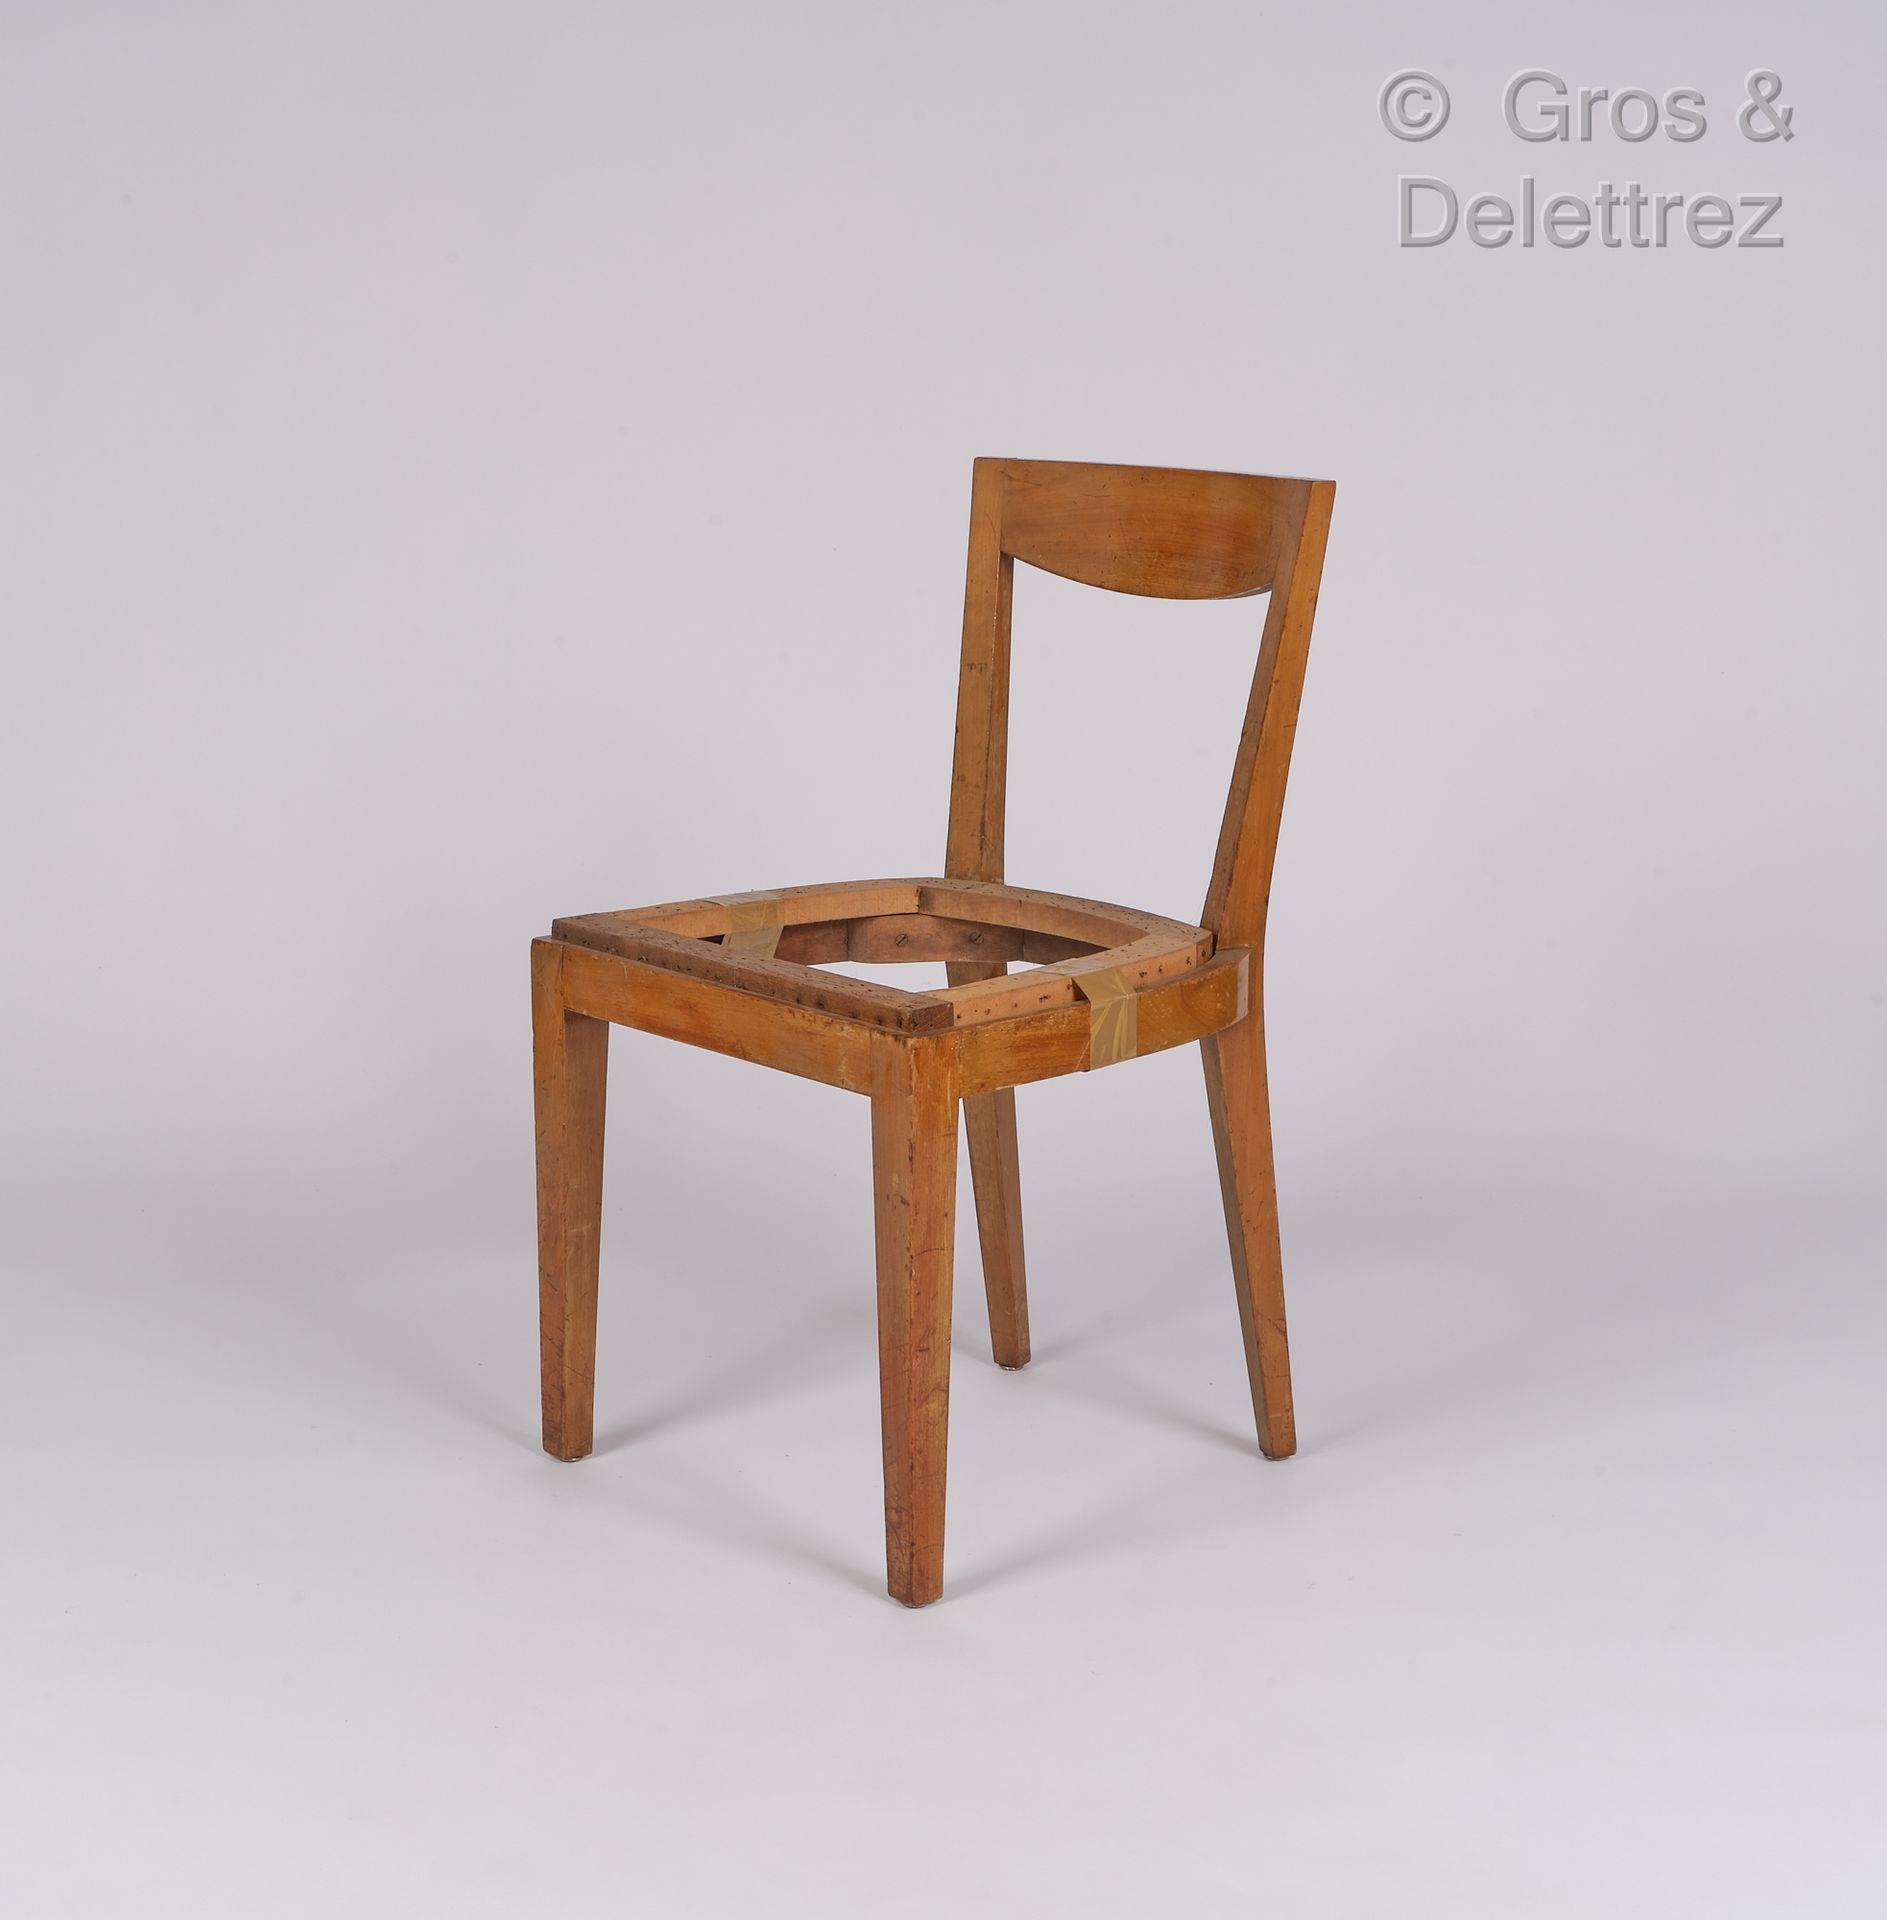 Null 欧仁-普林兹 (1879 - 1948)

金色桃花心木椅

高：78厘米，宽：46厘米，深：43厘米